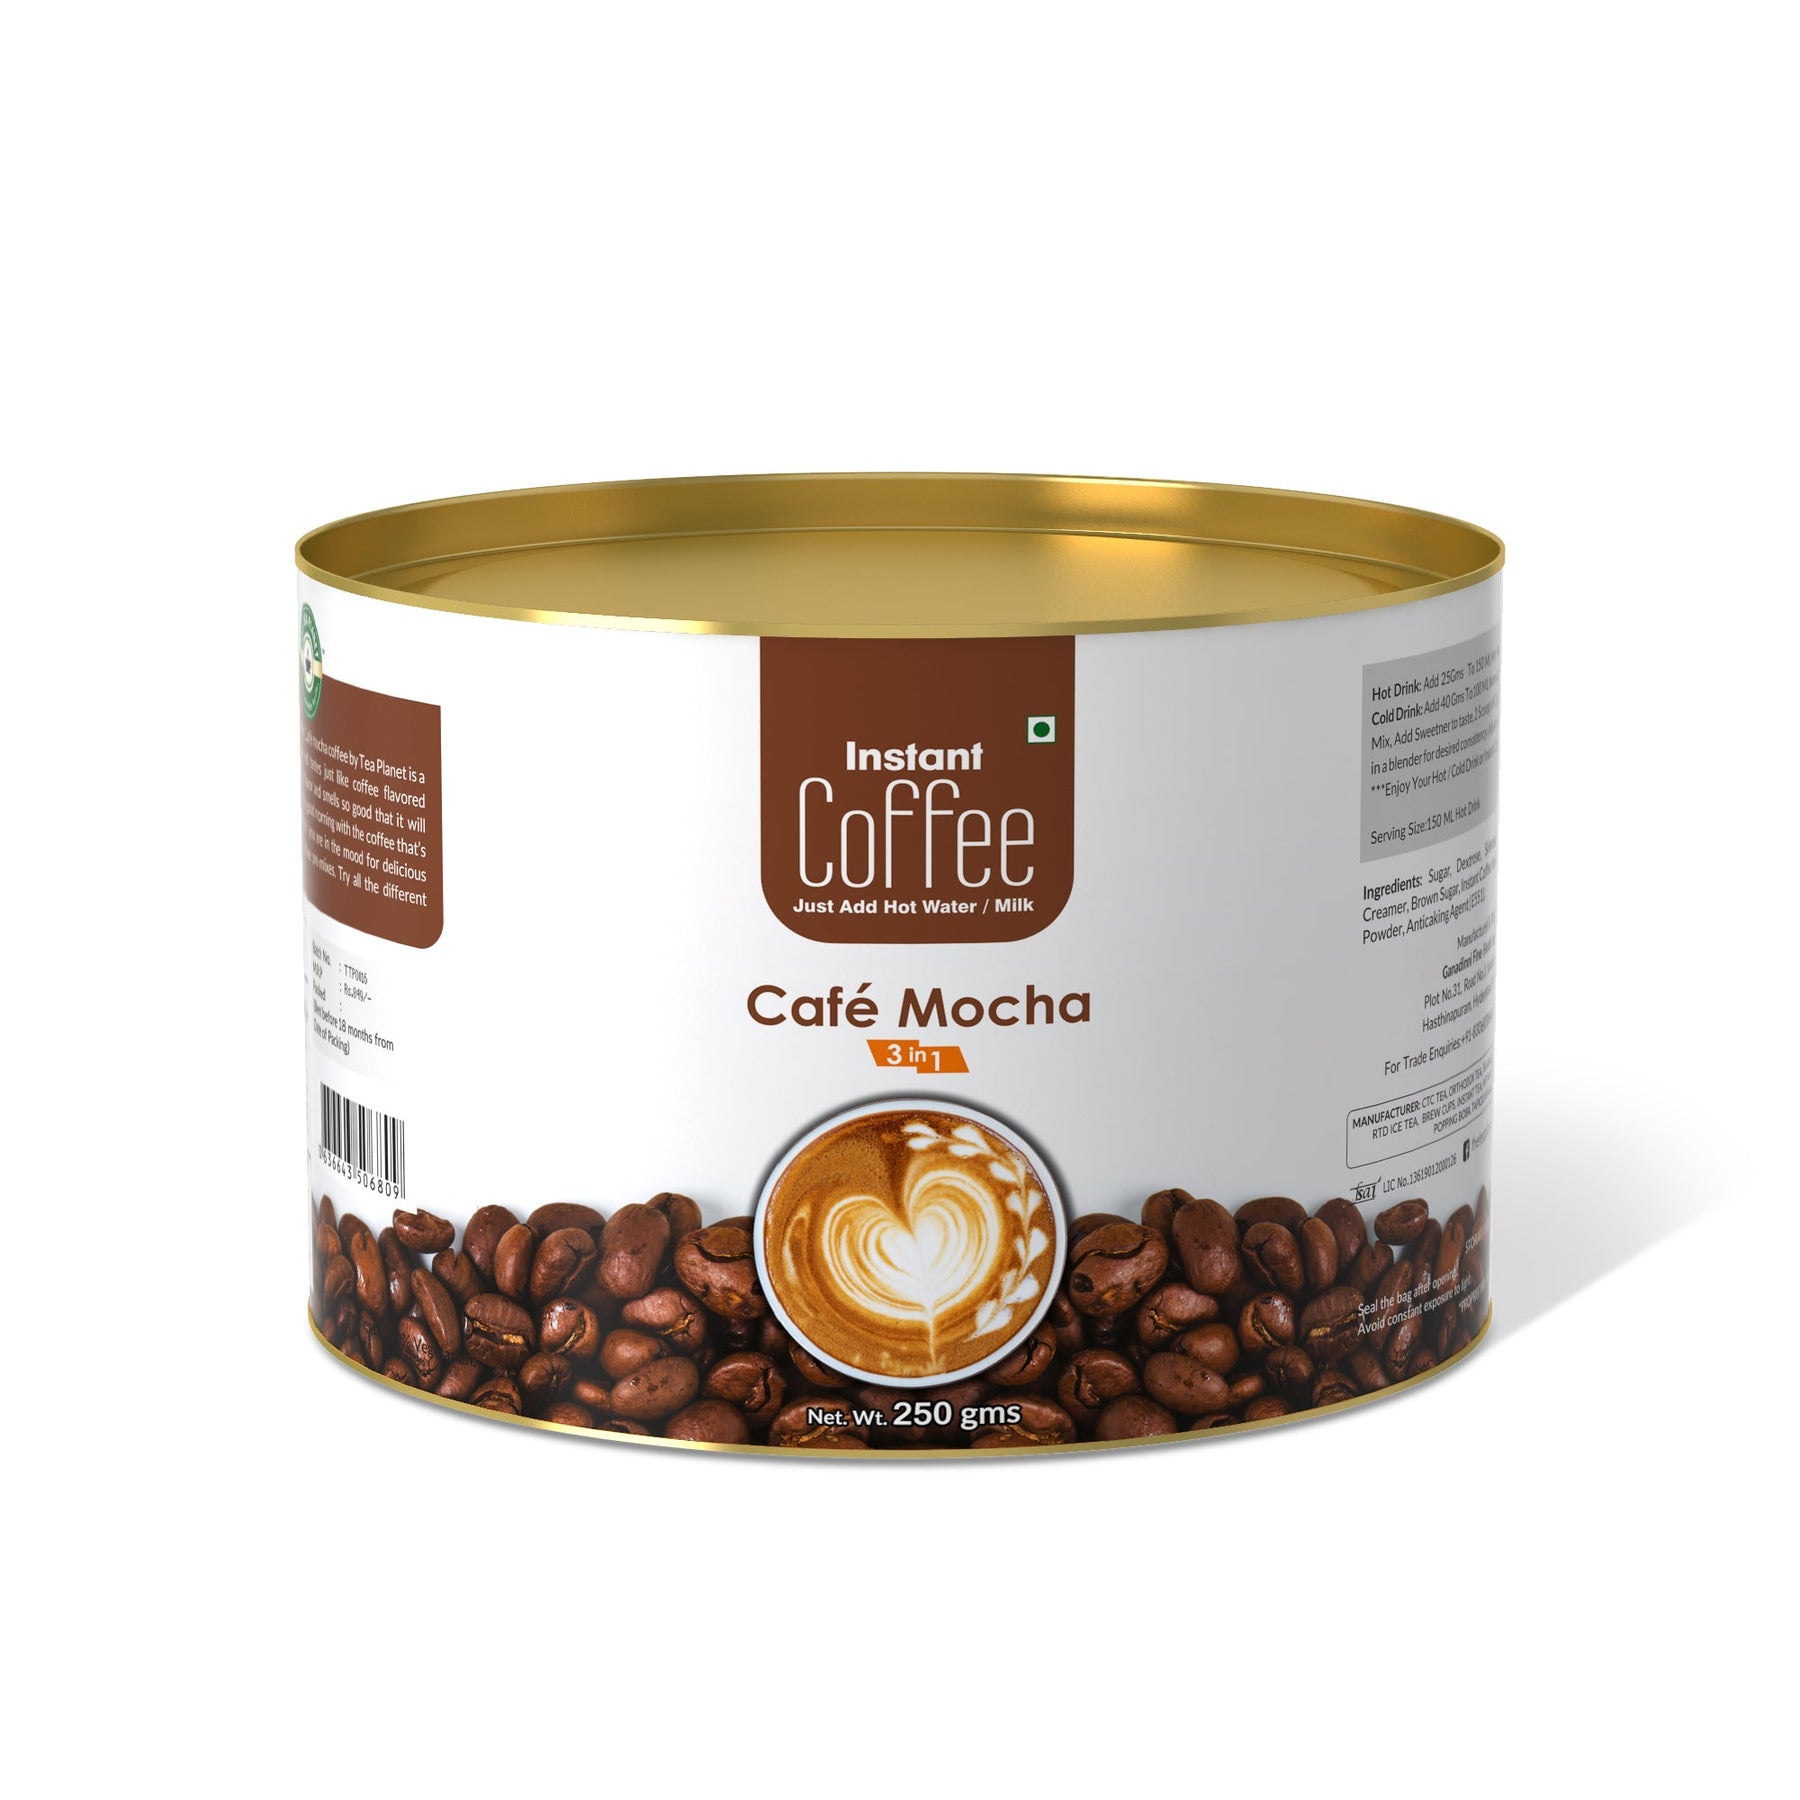 Cafe Mocha Instant Coffee Premix (3 in 1) - 250 gms